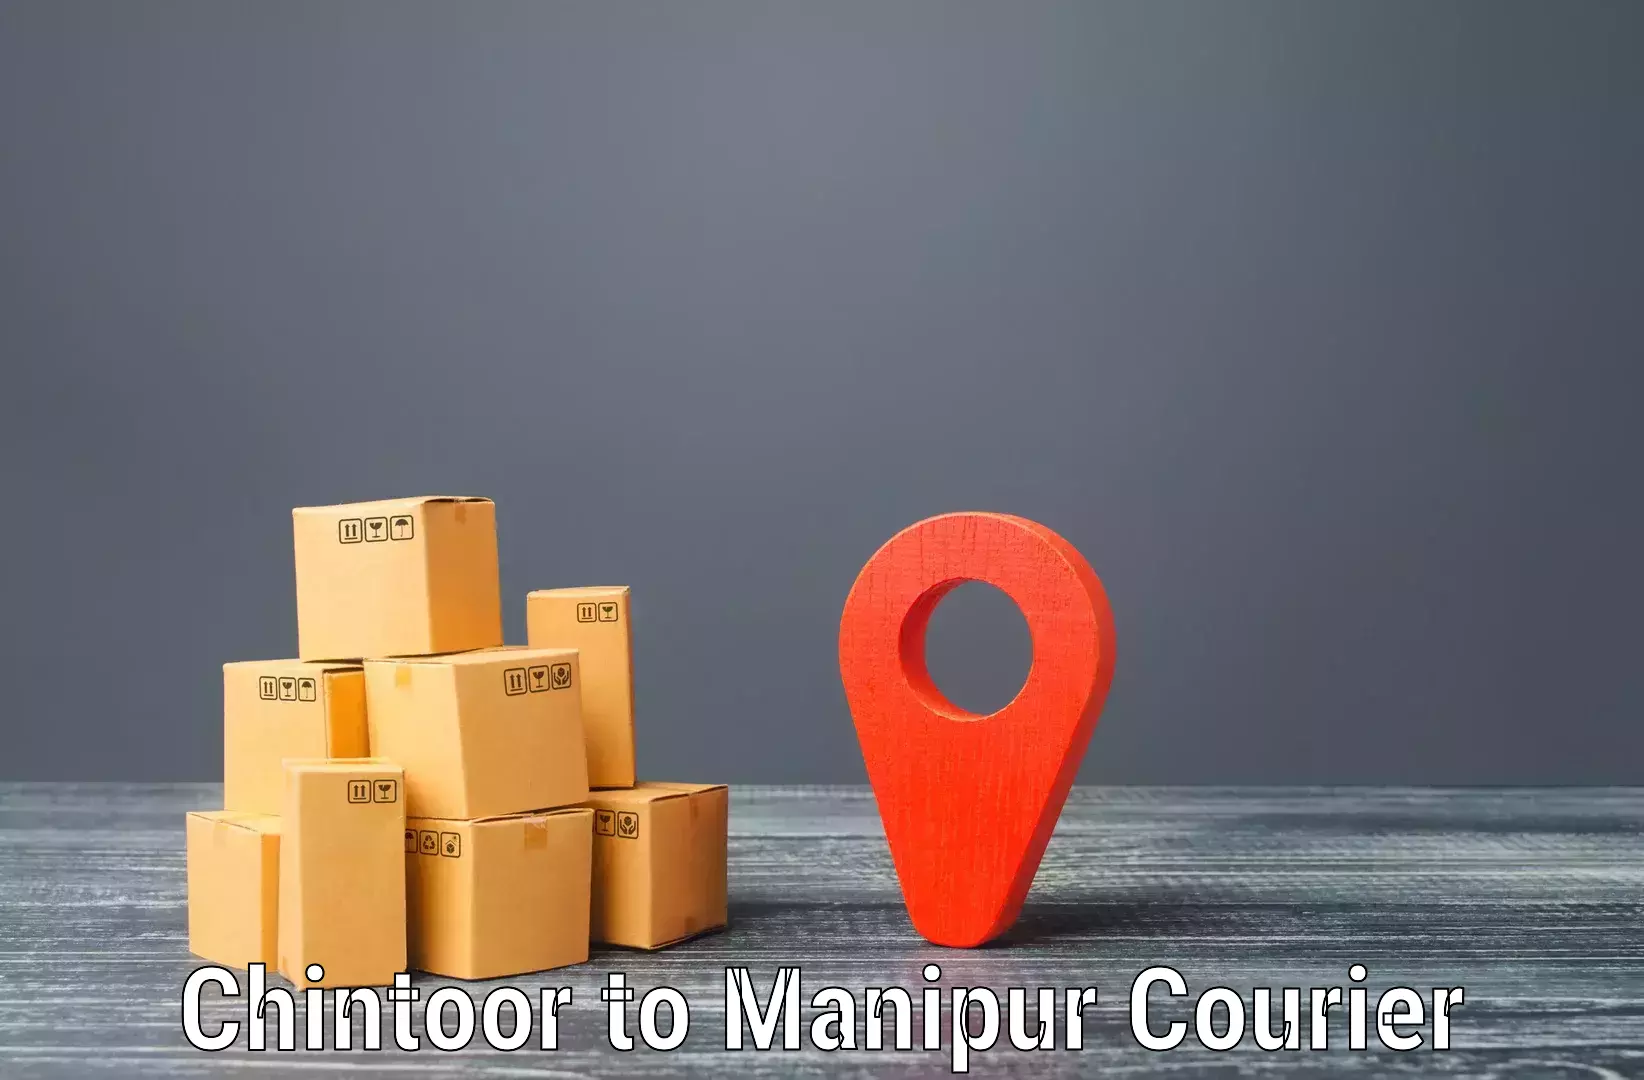 Cargo delivery service Chintoor to Churachandpur